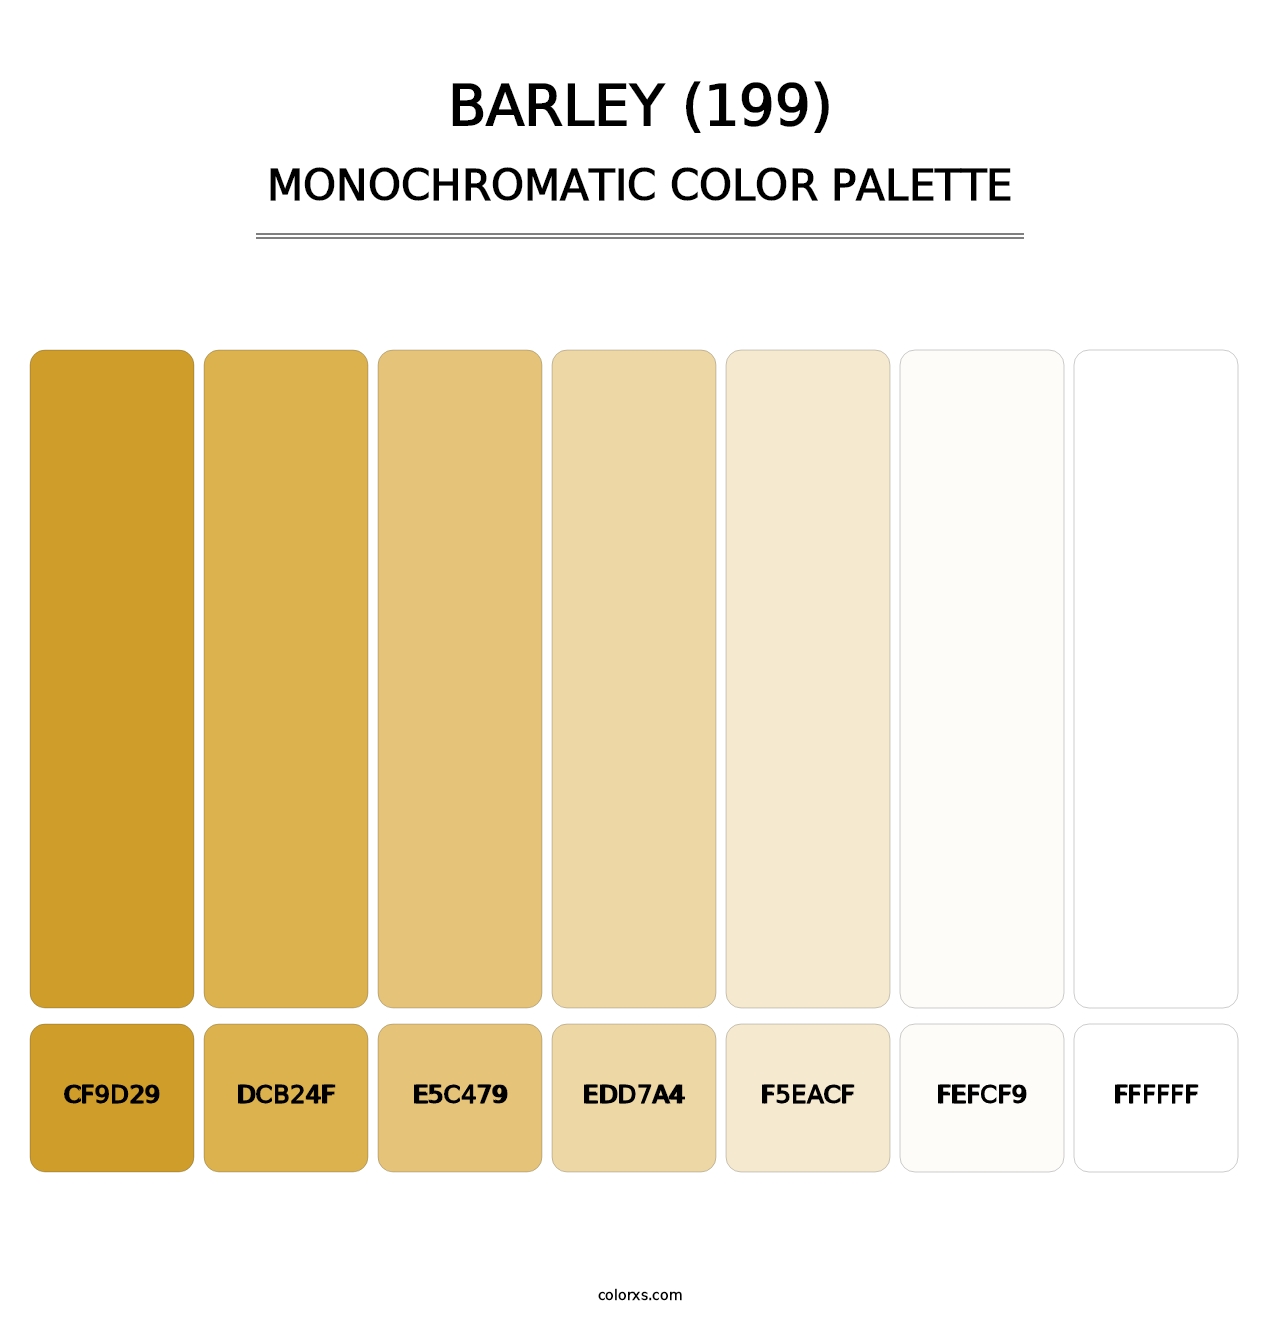 Barley (199) - Monochromatic Color Palette